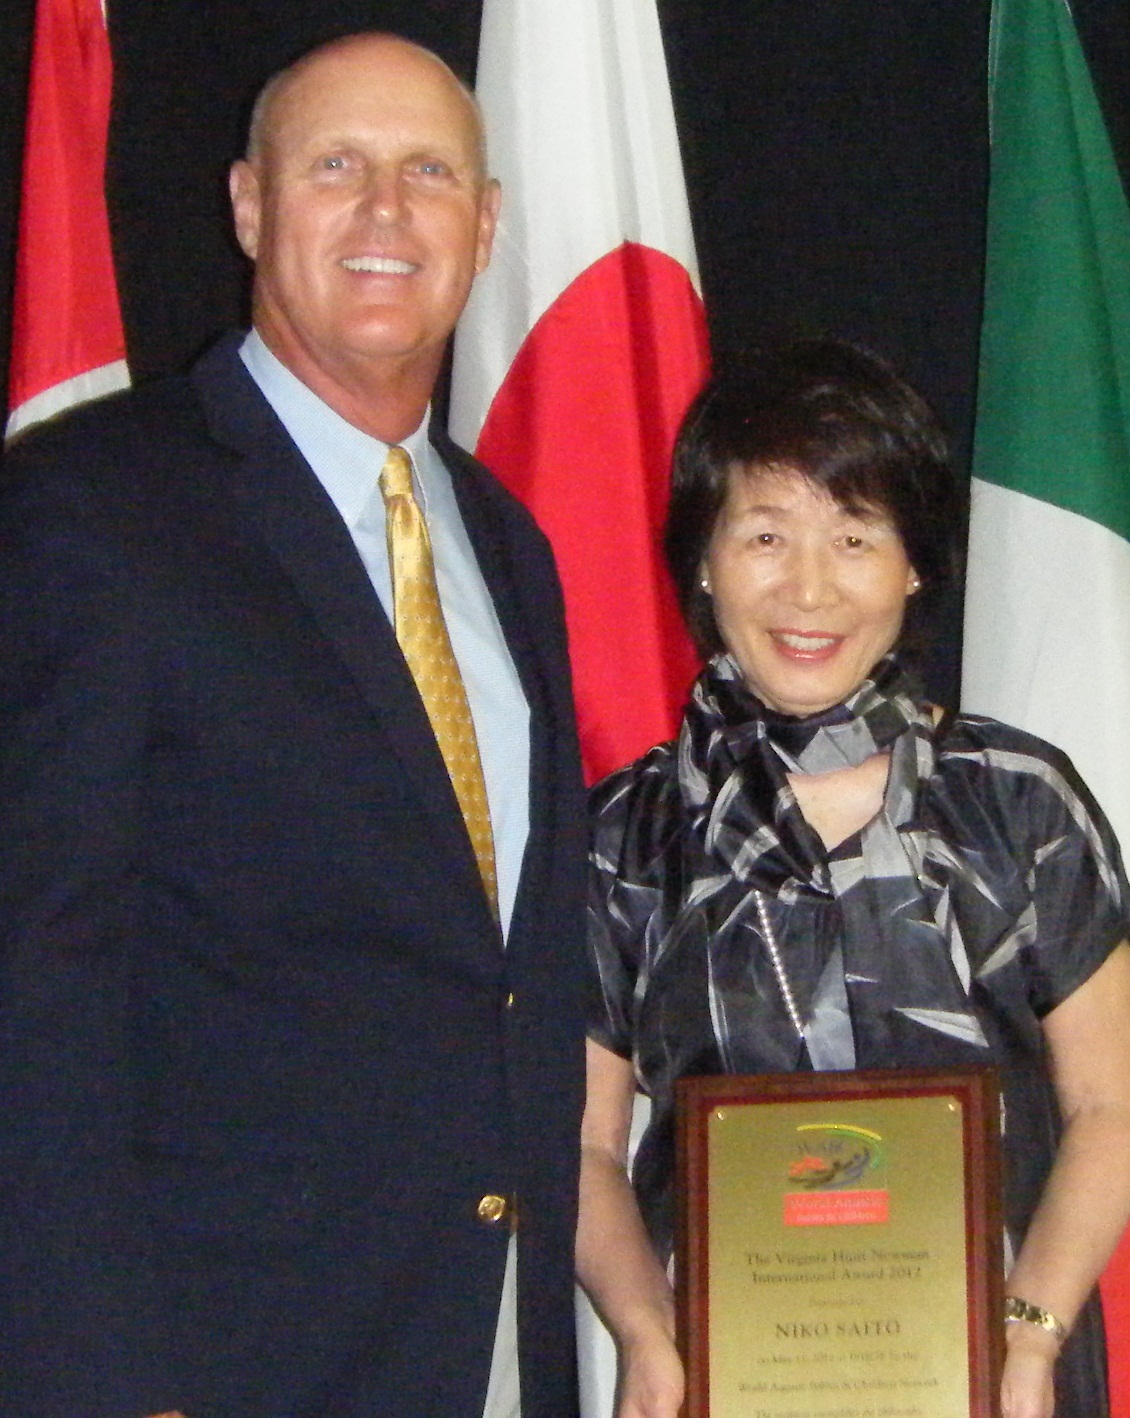 Steve with 2012 Newman Award Recipient Niko Saito of Japan